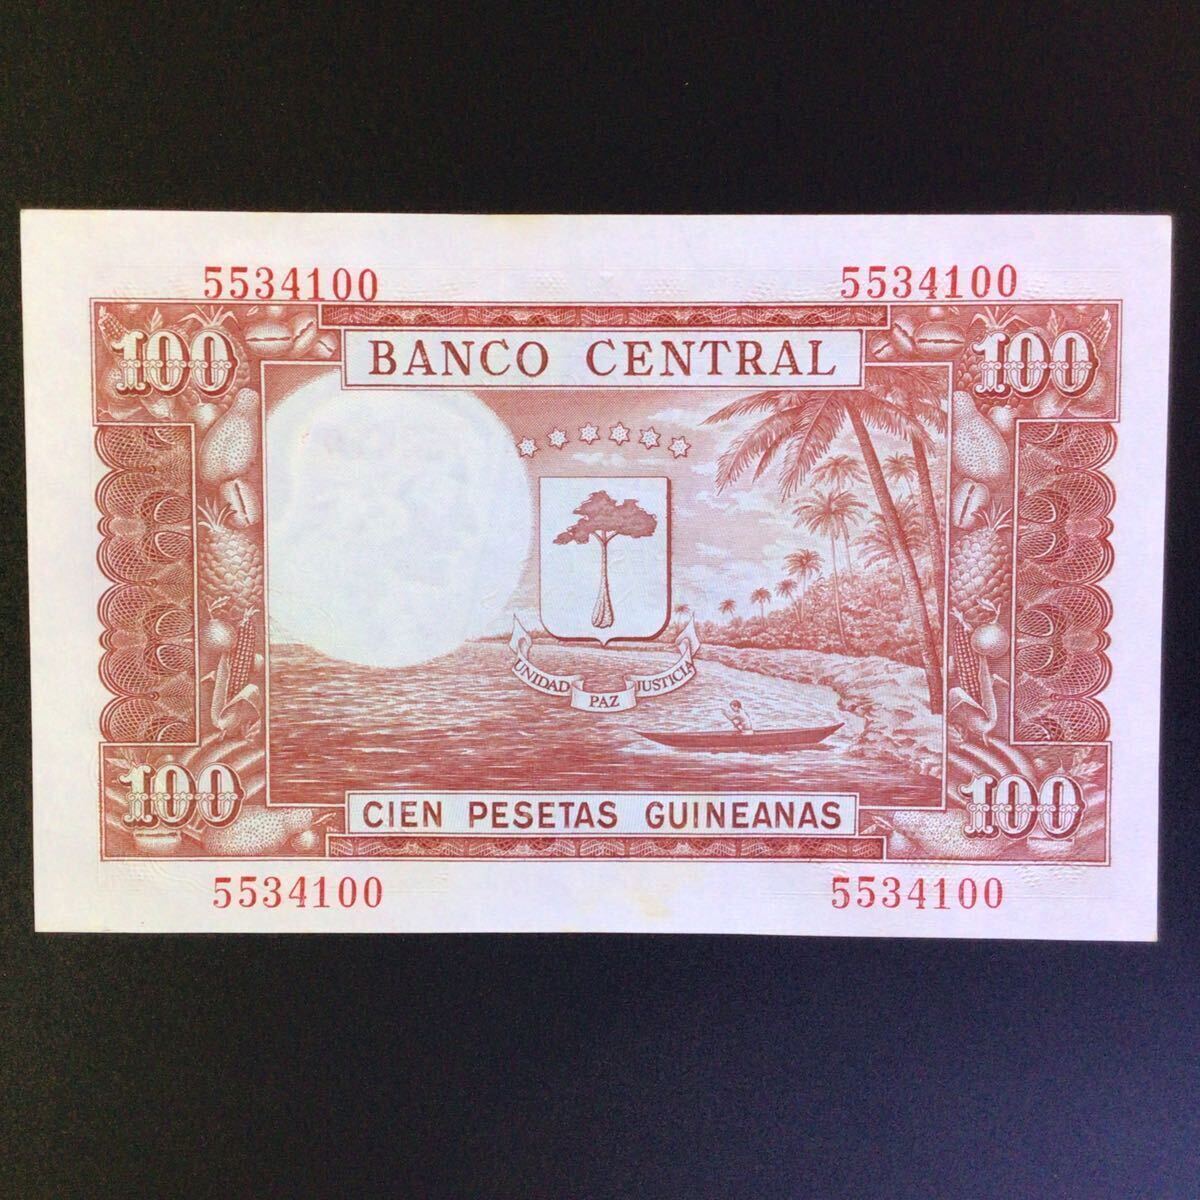 World Paper Money EQUATORIAL GUINEA 1000 Bipkwele on 100 Pesetas【1980】の画像2